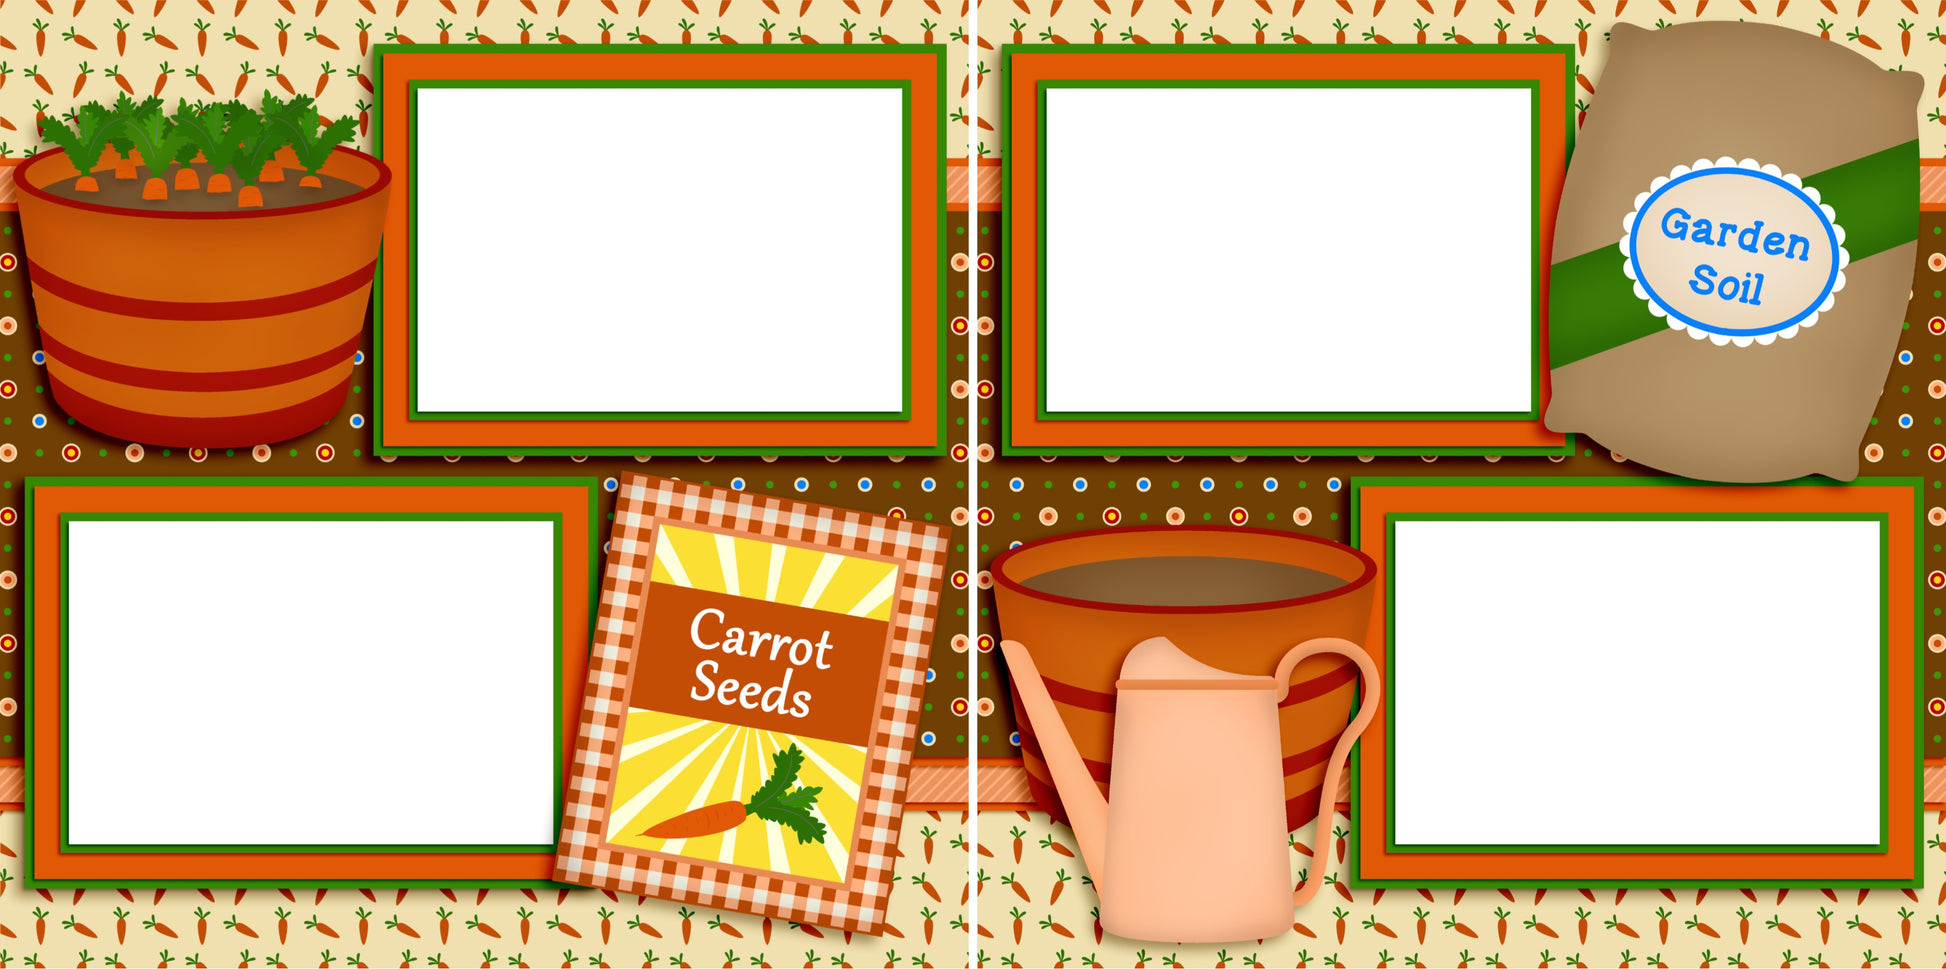 Carrot Seeds - Digital Scrapbook Pages - INSTANT DOWNLOAD - EZscrapbooks Scrapbook Layouts Farm - Garden, Spring - Easter